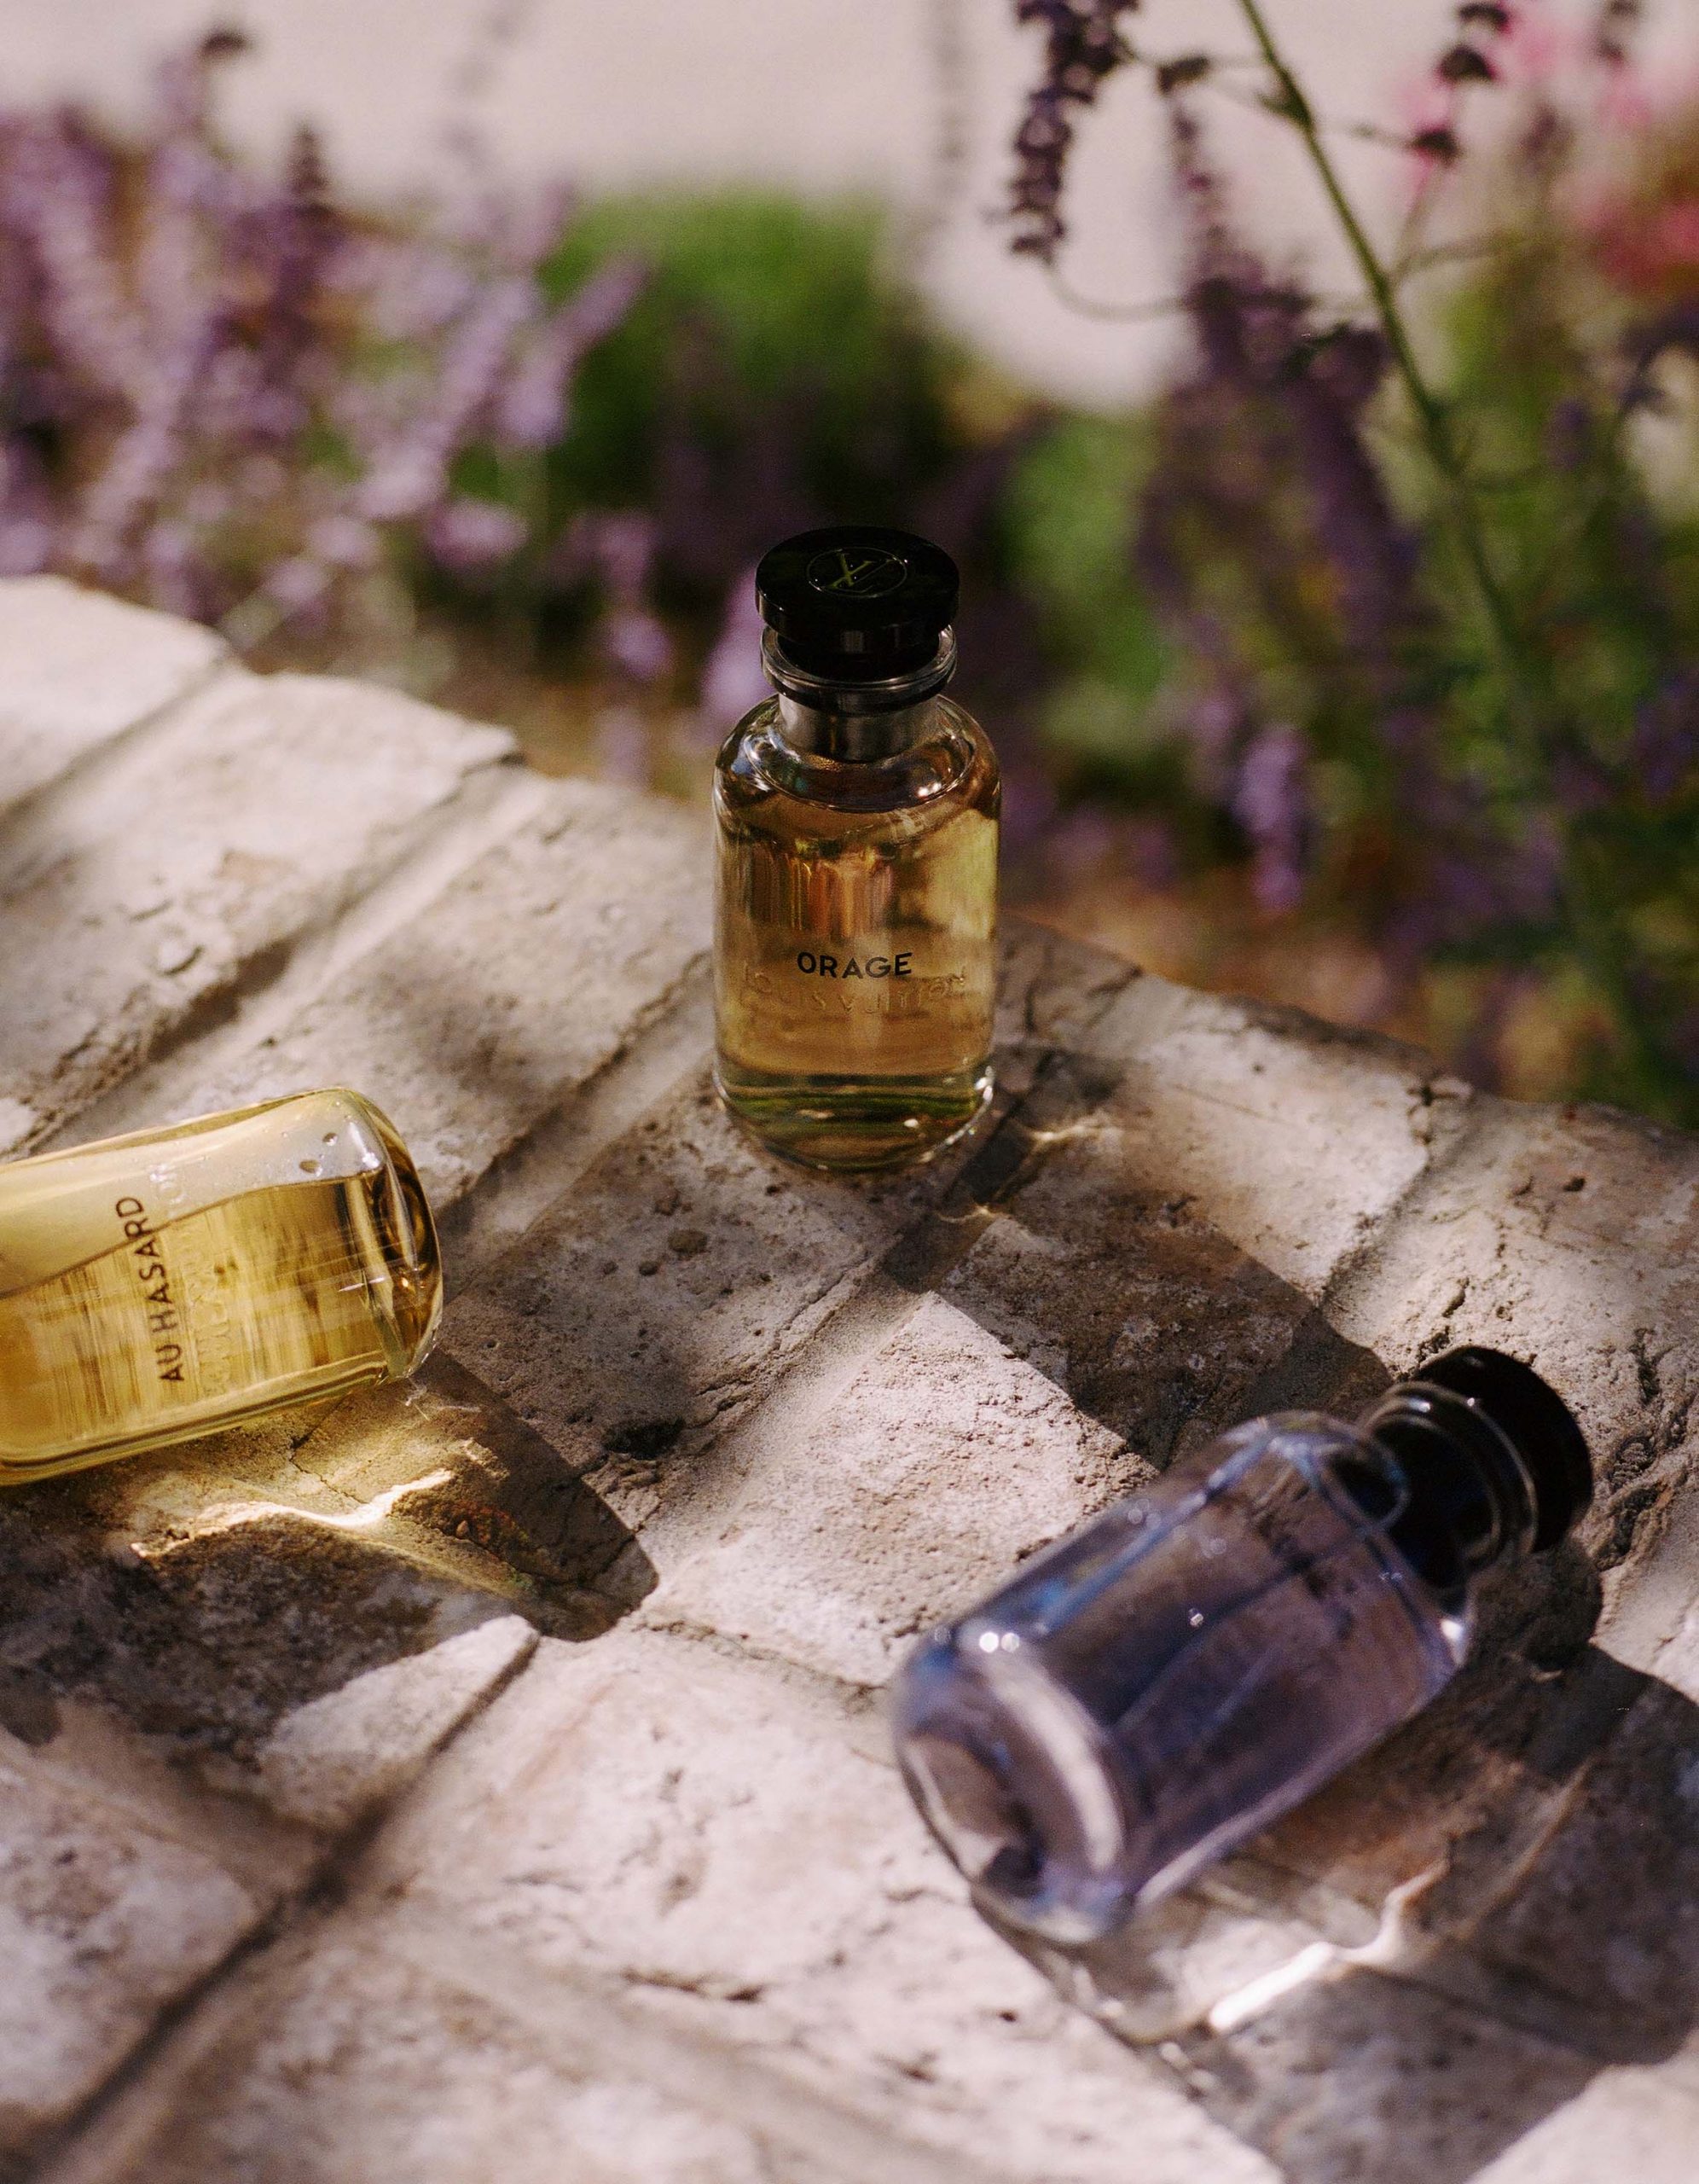 Louis Vuitton Au Hasard Empty Perfume Bottle